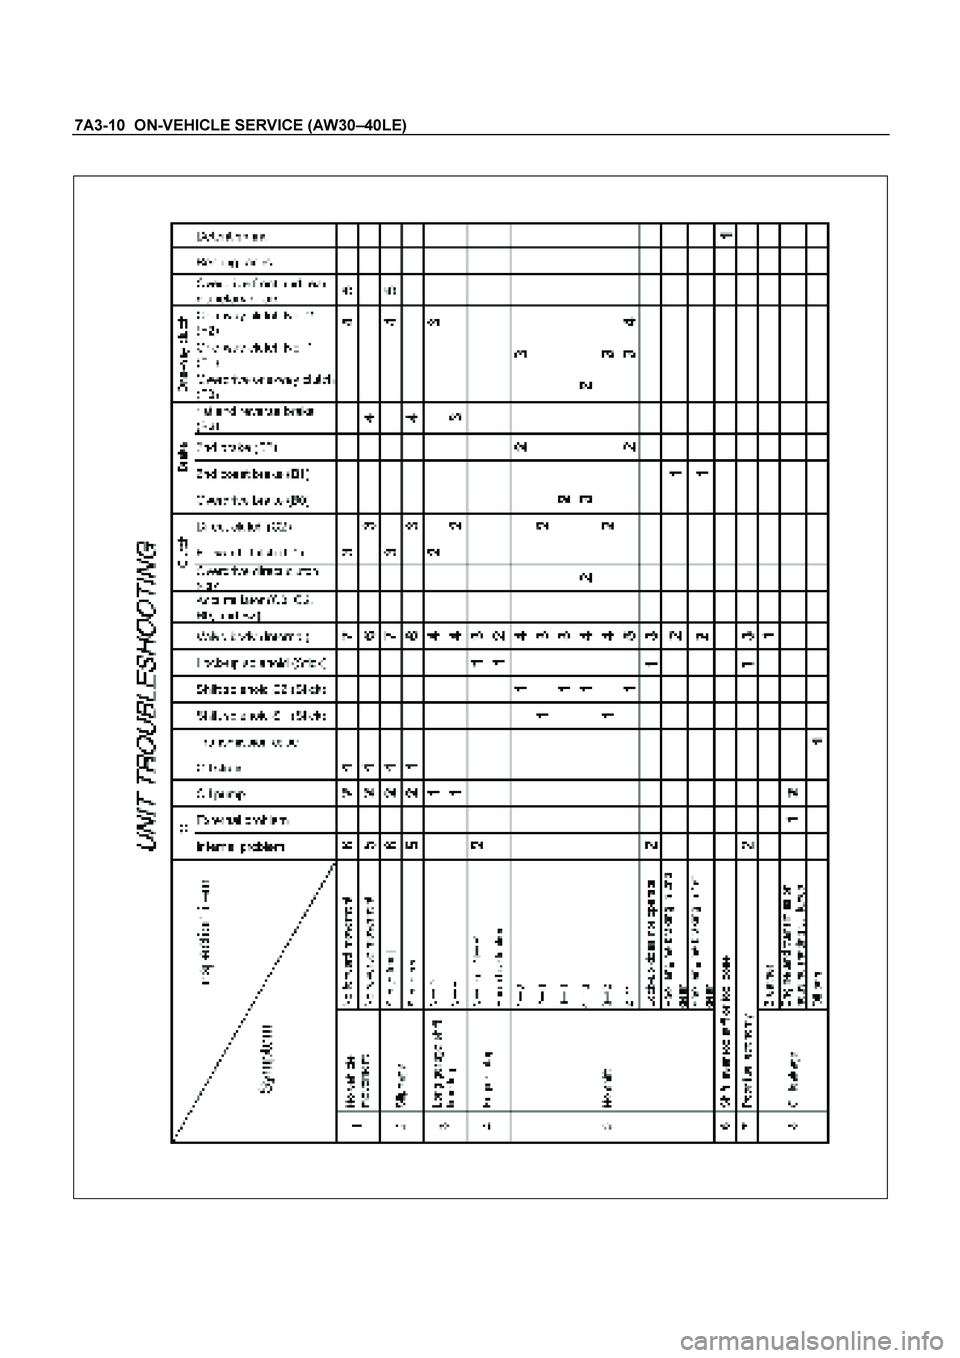 ISUZU TF SERIES 2004  Workshop Manual 7A3-10  ON-VEHICLE SERVICE (AW30 –40LE) 
 
 
   
 
 
  
  